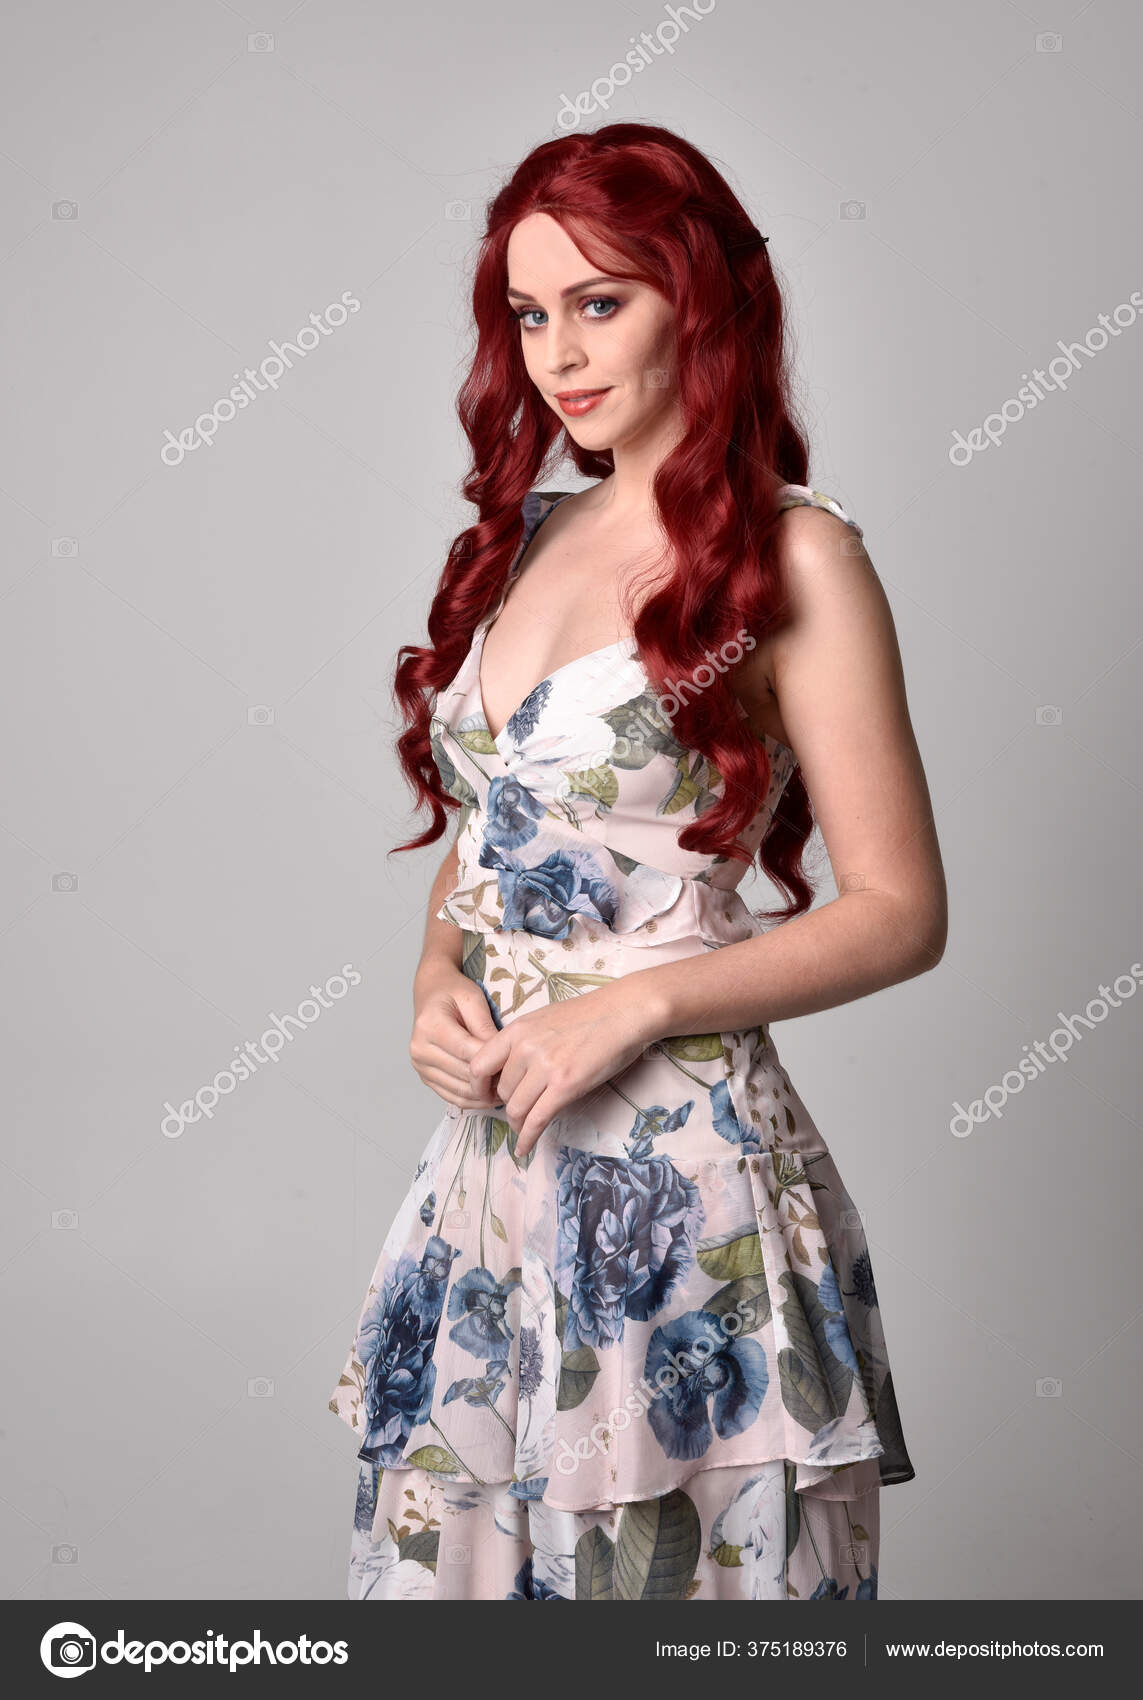 https://st3.depositphotos.com/15952980/37518/i/1600/depositphotos_375189376-stock-photo-portrait-beautiful-woman-red-hair.jpg